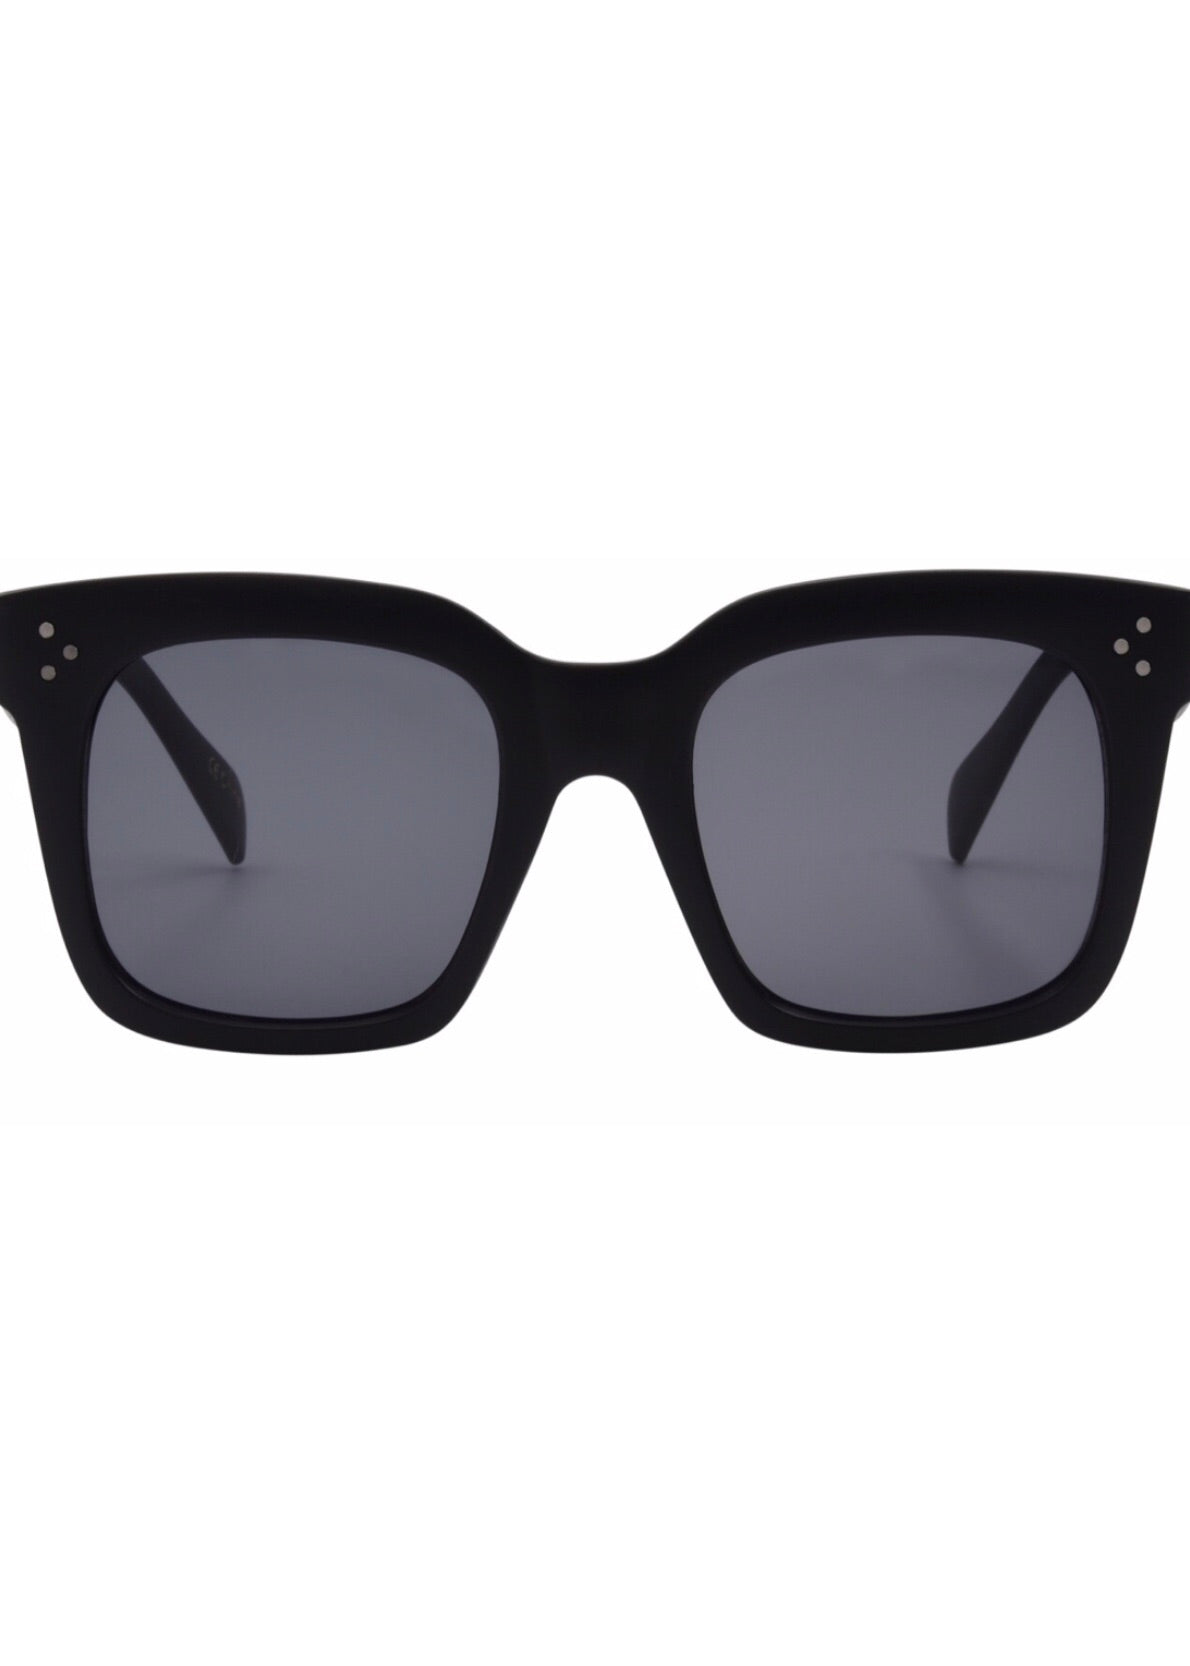 OC Boutique Waverly black sunglasses Isea 1